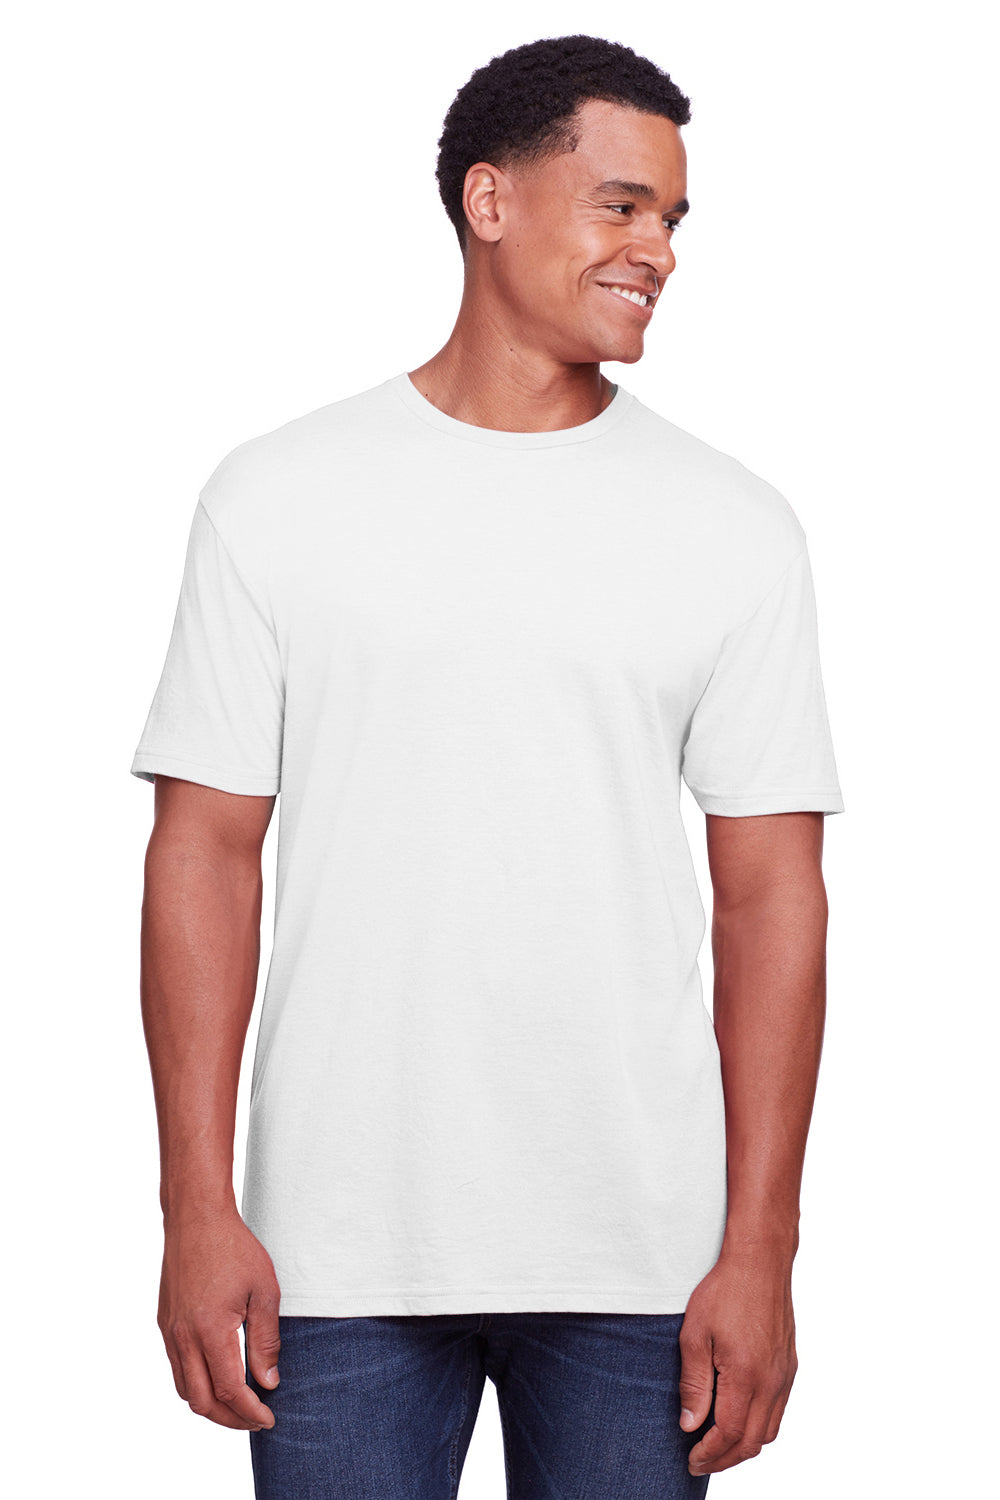 Gildan G670 Mens Softstyle CVC Short Sleeve Crewneck T-Shirt White Front